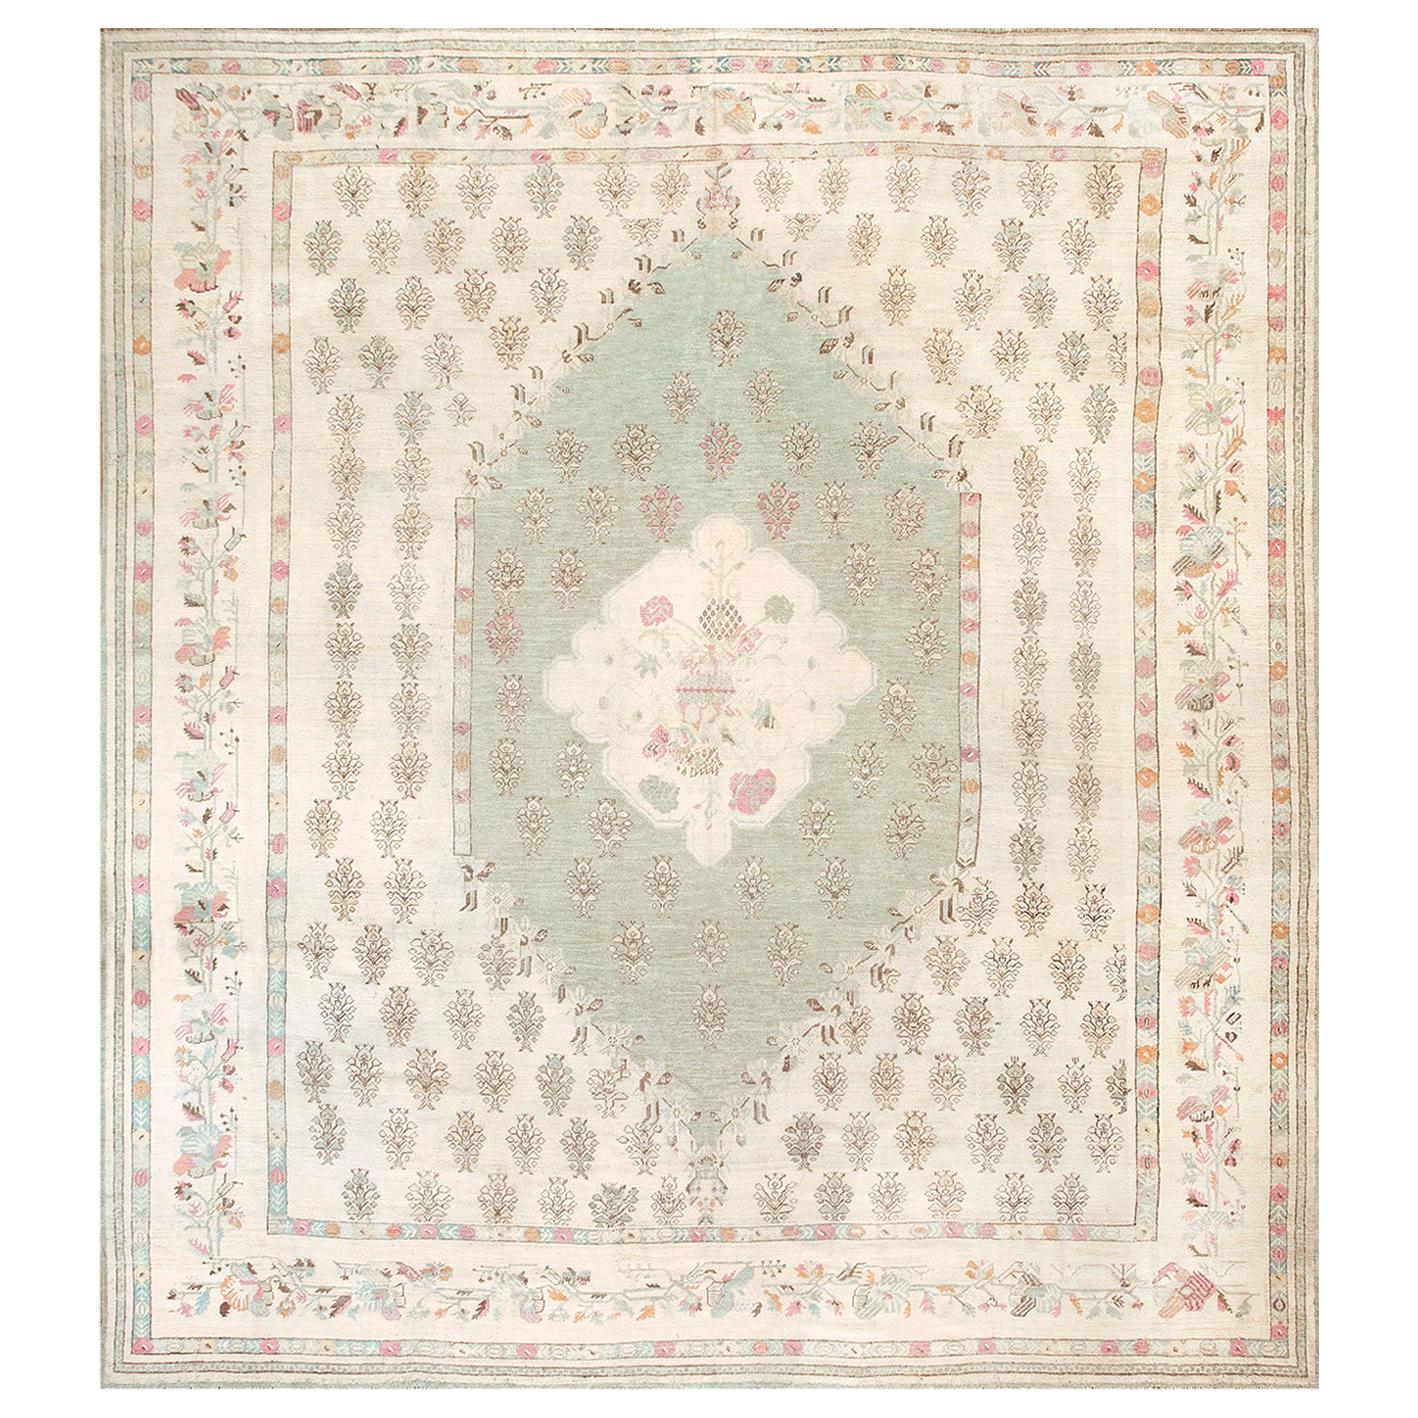 Late 19th Century Turkish Oushak Ghiordes Carpet ( 13' x 14'6" - 396 x 442 cm) For Sale